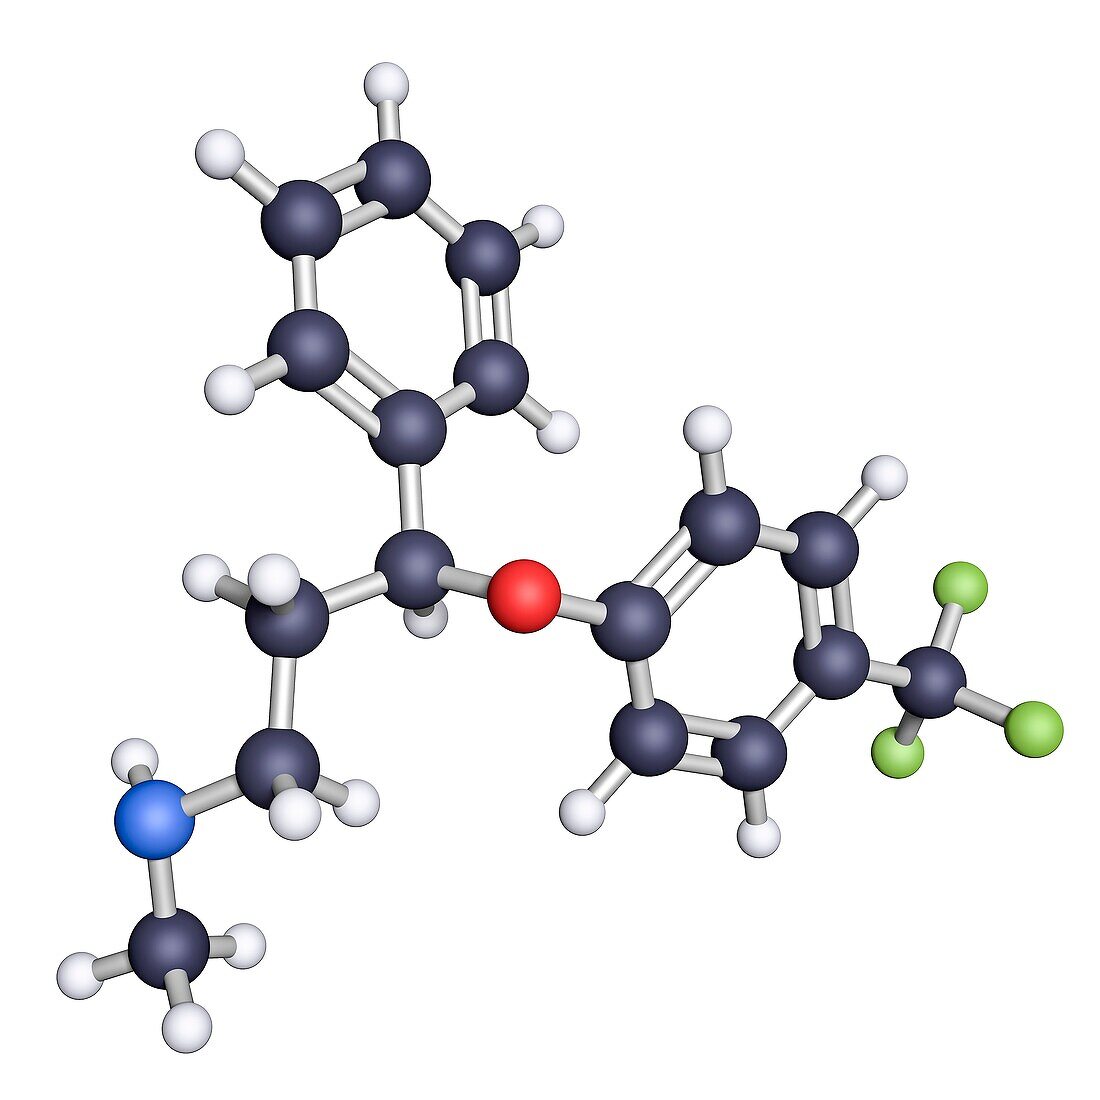 Fluoxetine antidepressant drug, molecular model